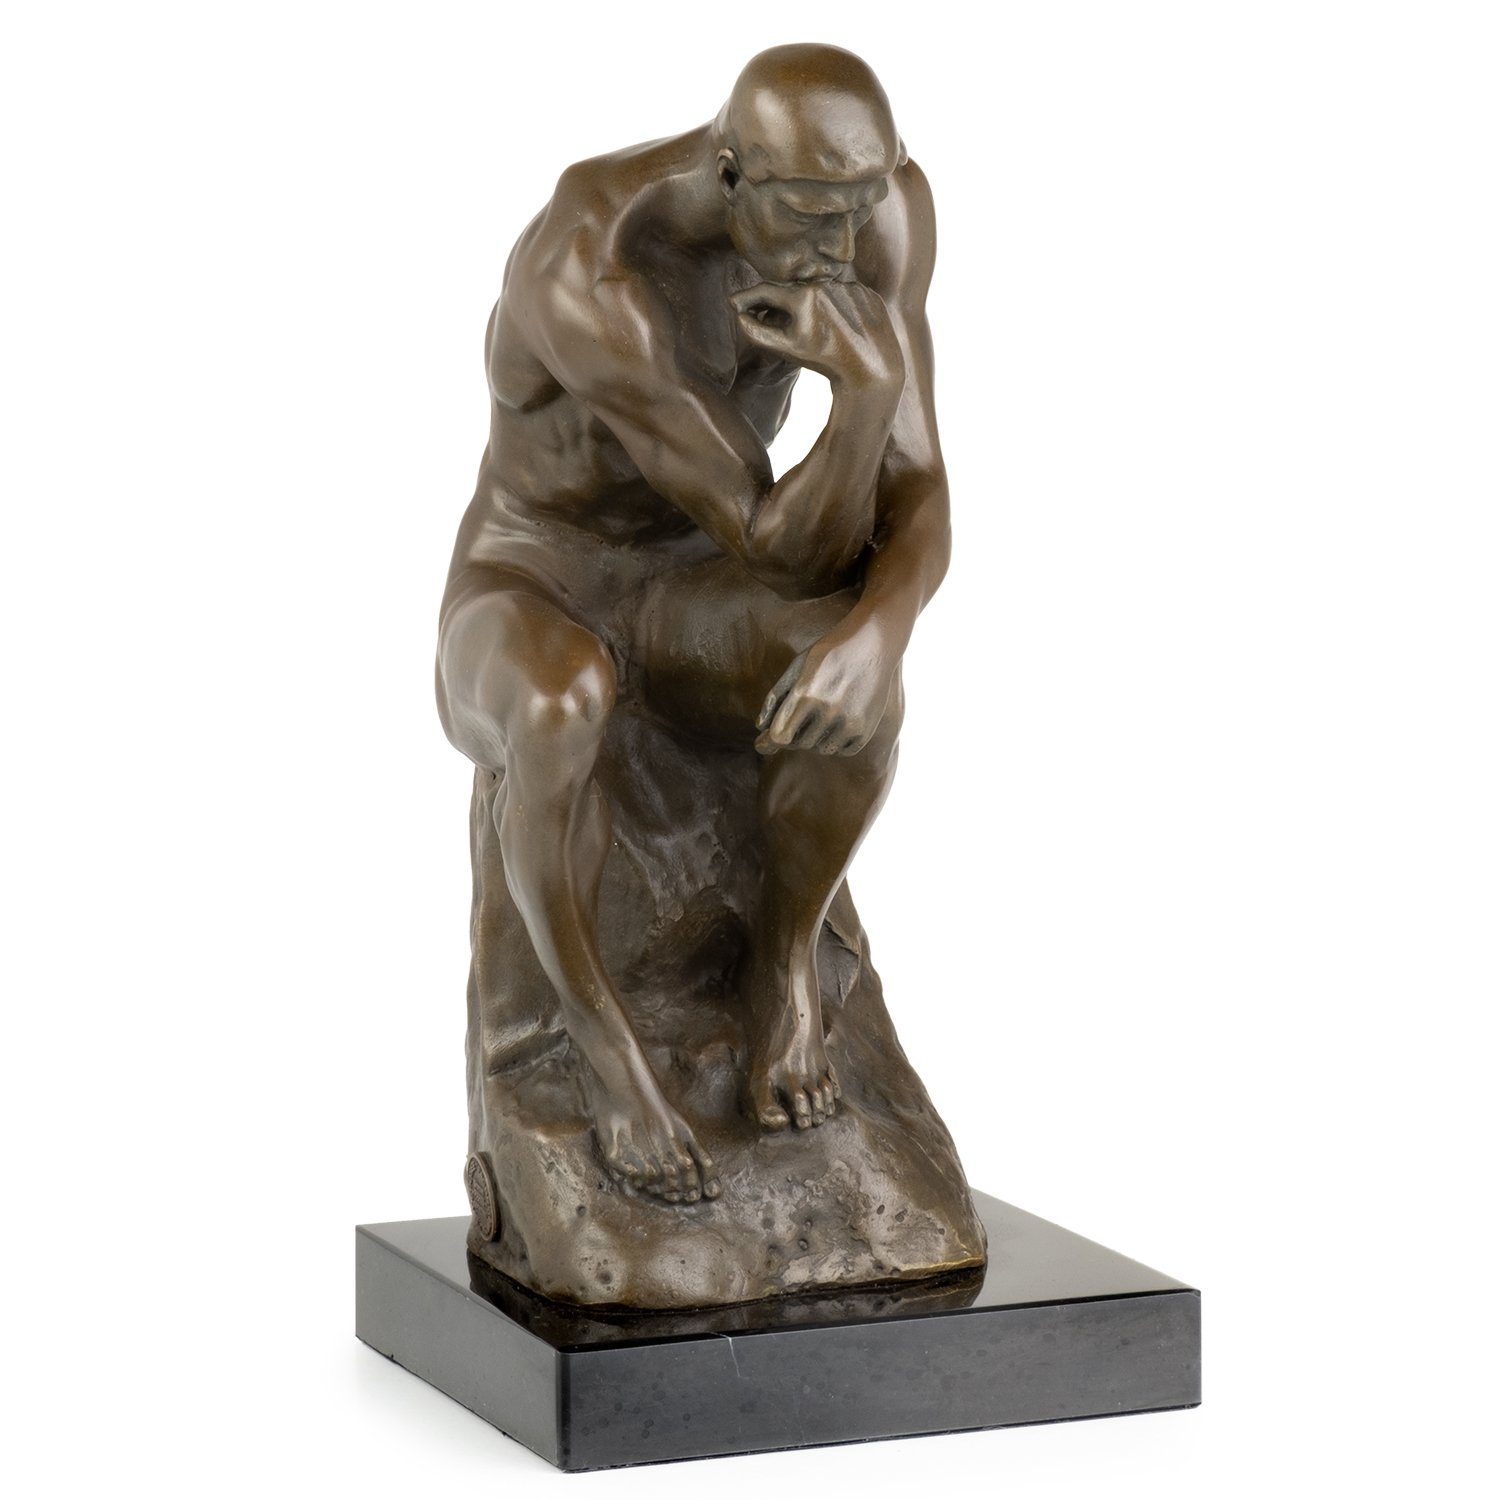 Moritz Skulptur Bronzefigur nach Antik-Stil Statue Skulpturen Figuren Denker Rodin